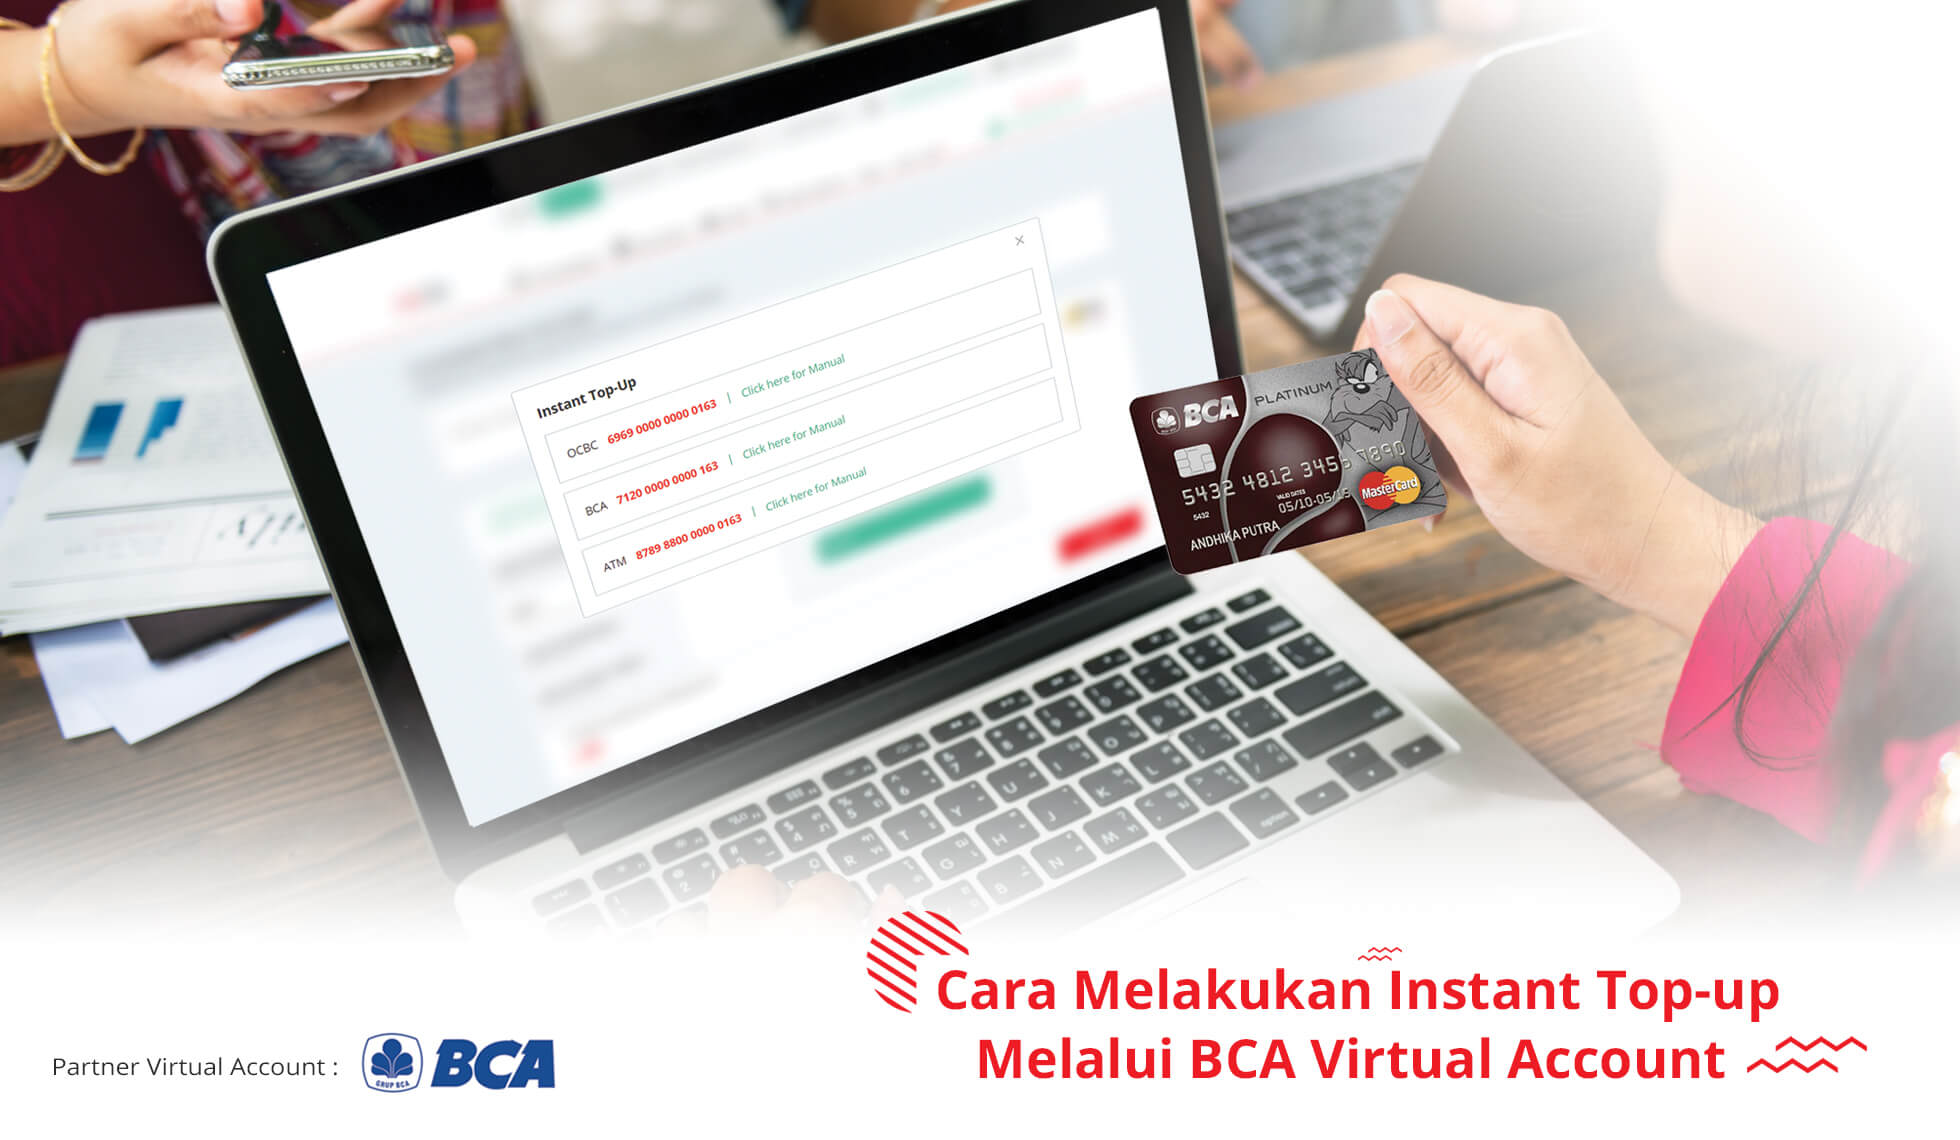 Cara Melakukan Instant Top-up melalui BCA Virtual Account